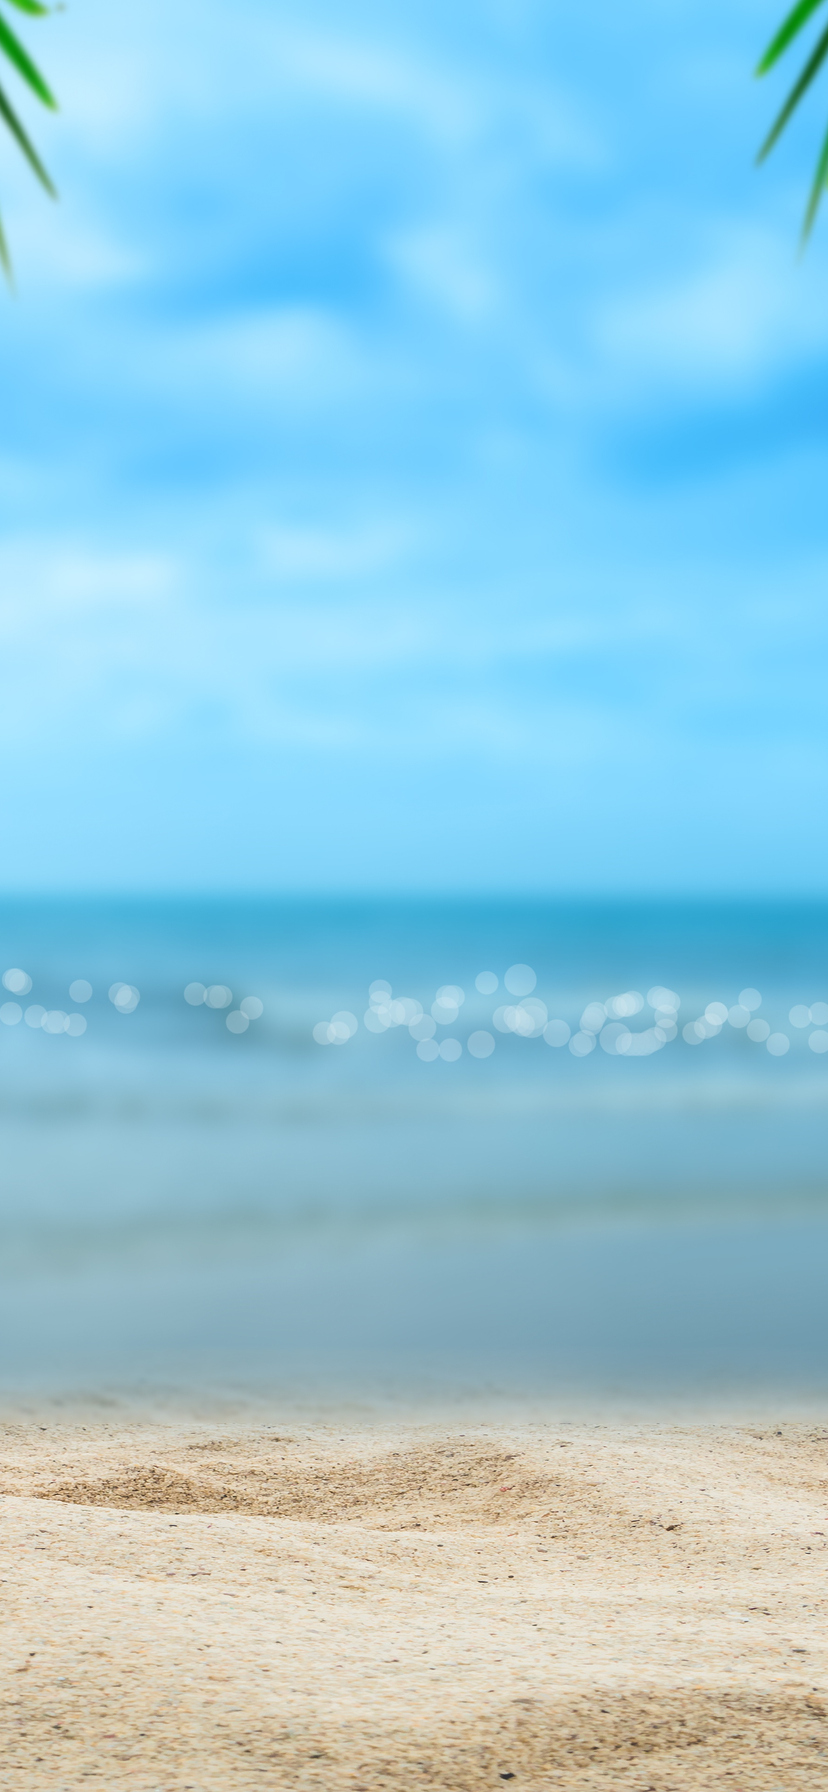 Download Beach in summer, Beach, In summer, Sand, Sea, Summer, Sky, Sun, Palm trees, Coast, Coast, Beautiful, Paradise, Tropical, Warm, 2k, 3k, 4k, 5k, 6k Wallpaper in 828x1792 Resolution